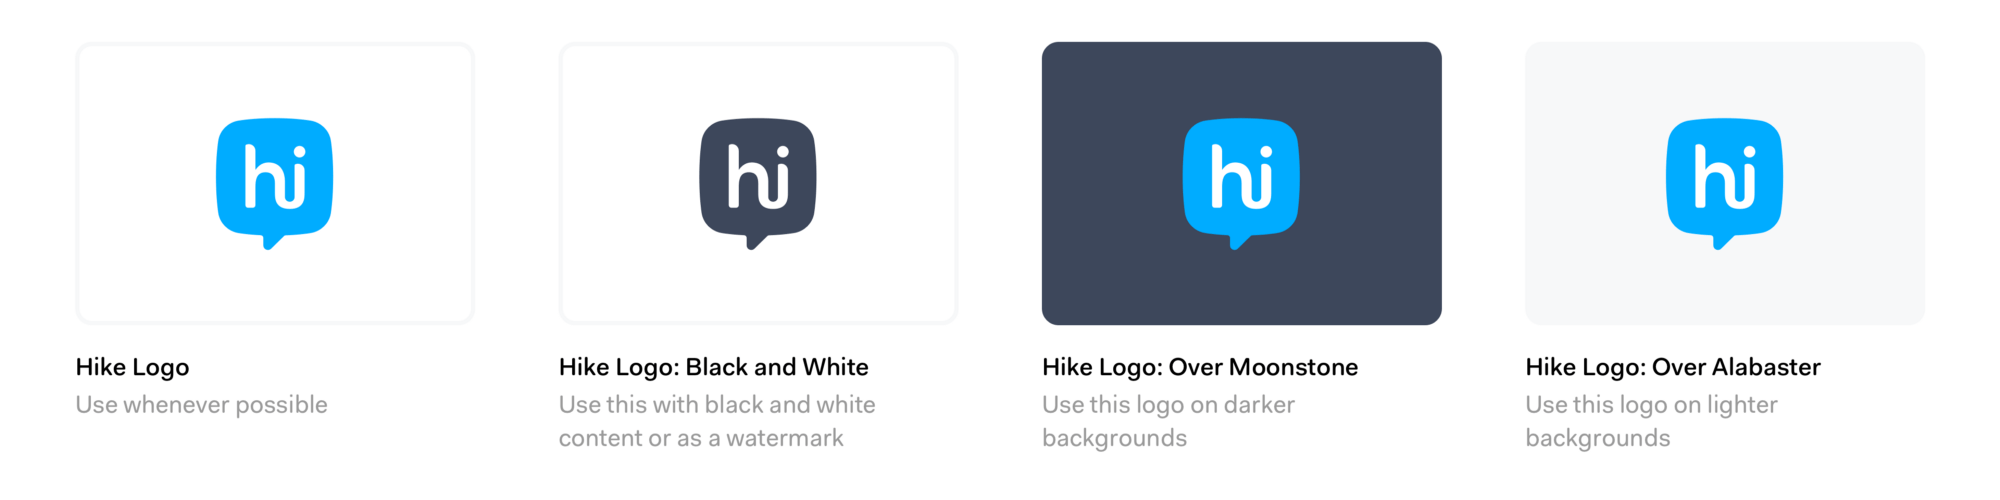 Hi Logo - Hike Logo Usage Guidelines